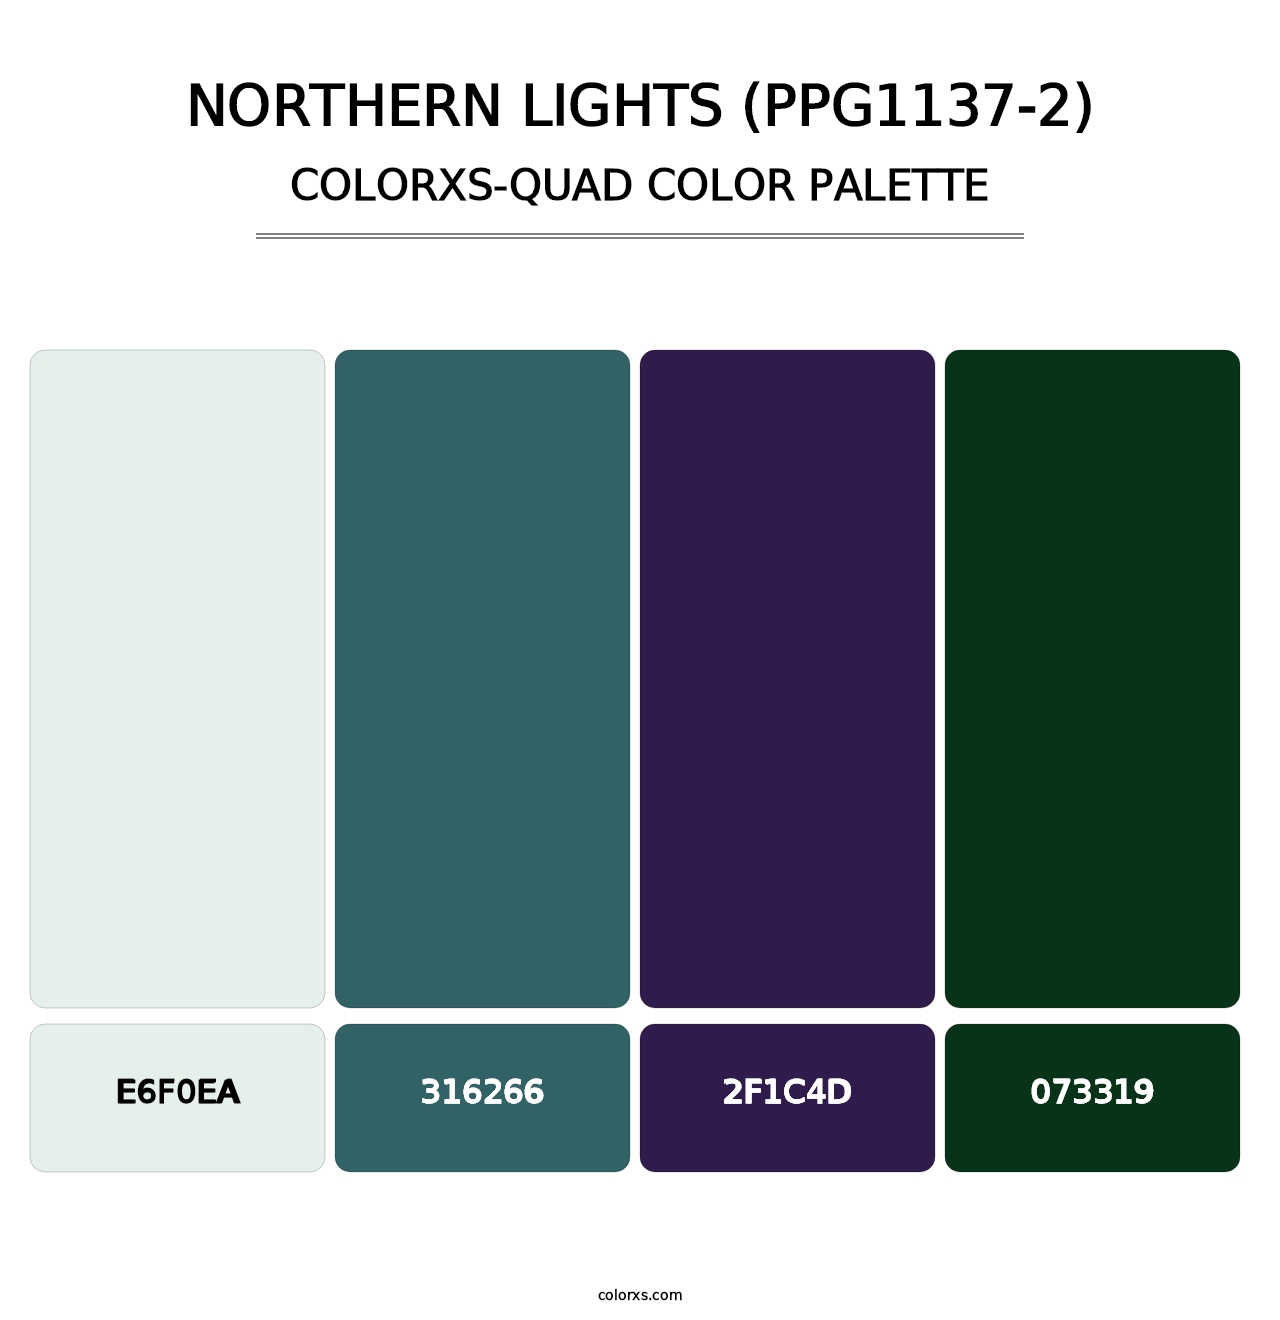 Northern Lights (PPG1137-2) - Colorxs Quad Palette